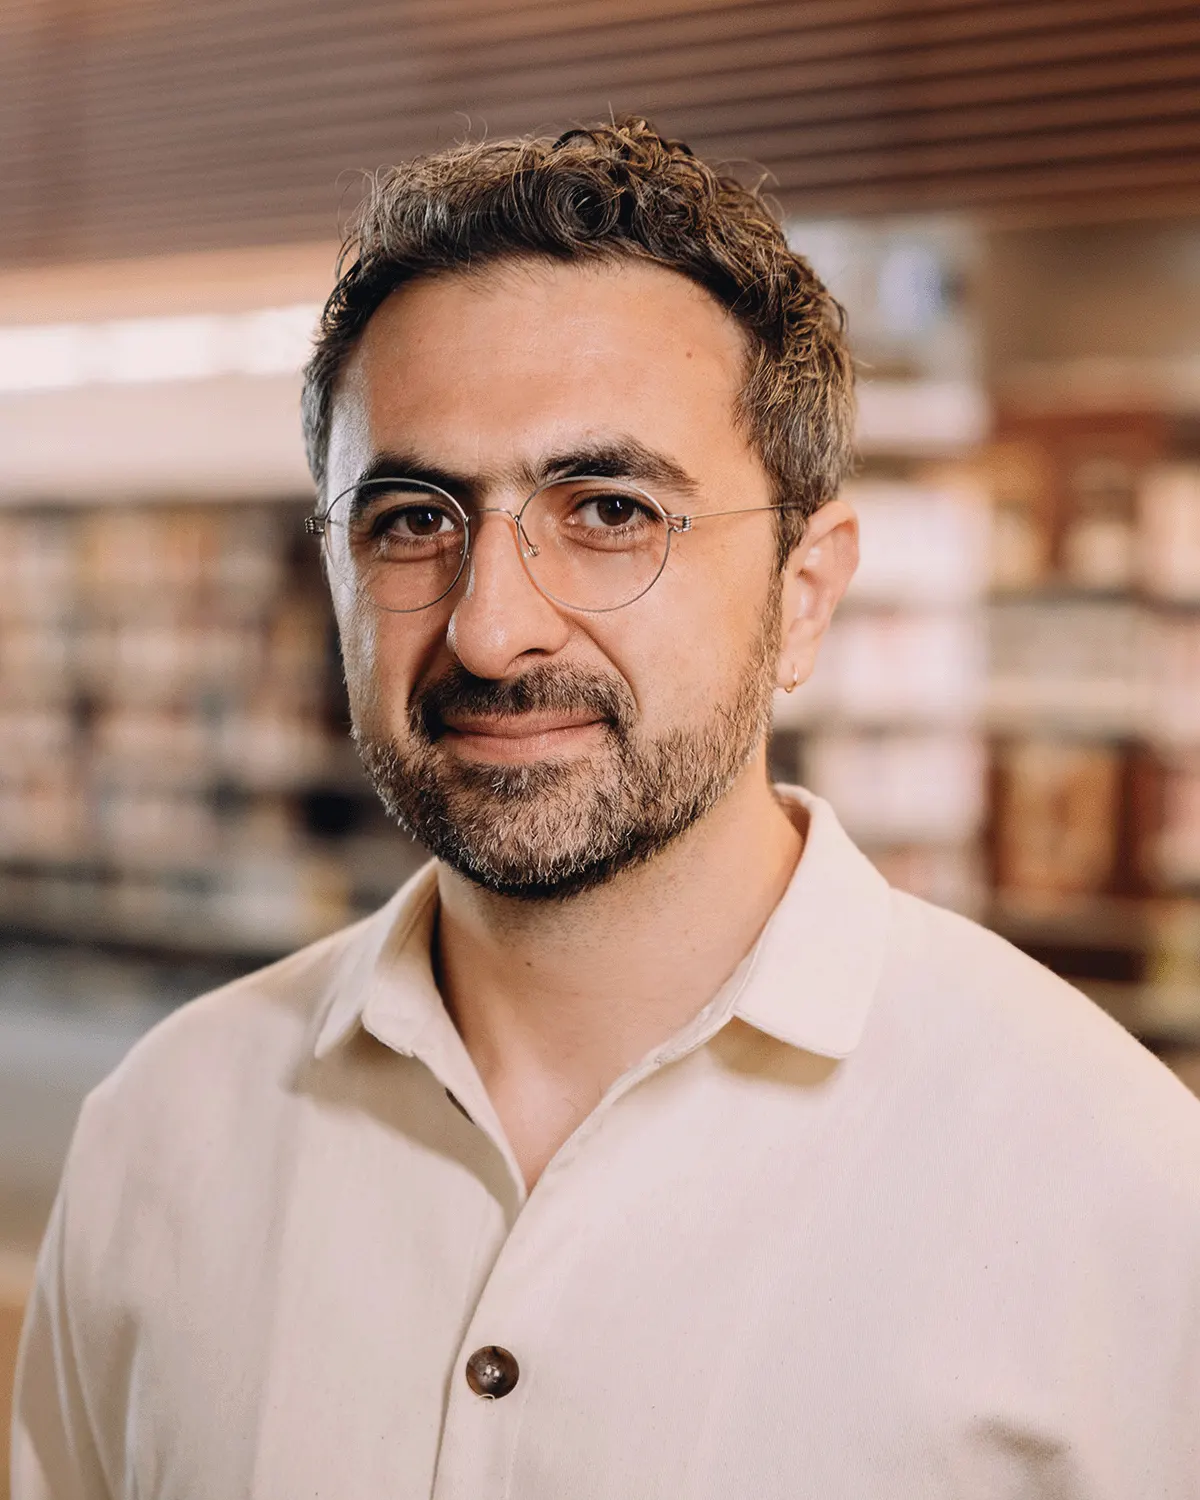 DeepMind co-founder Mustafa Suleyman calls for AI regulation